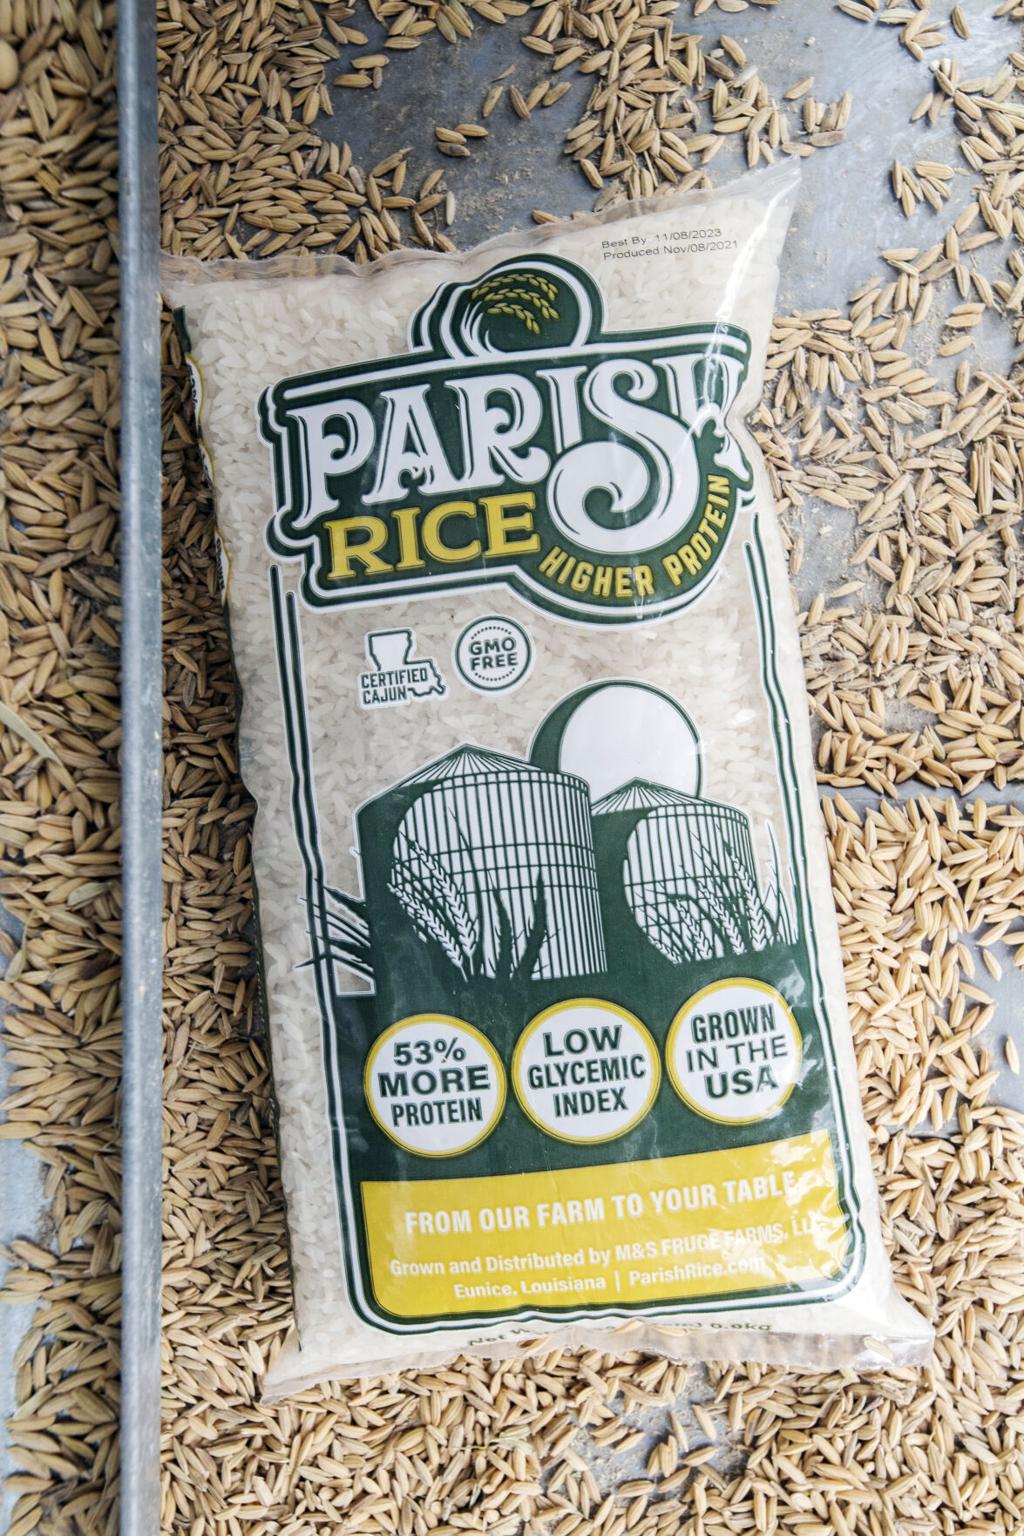 Parish Rice 40 Glycemic Index 53% More Protein Louisiana Grown GMO